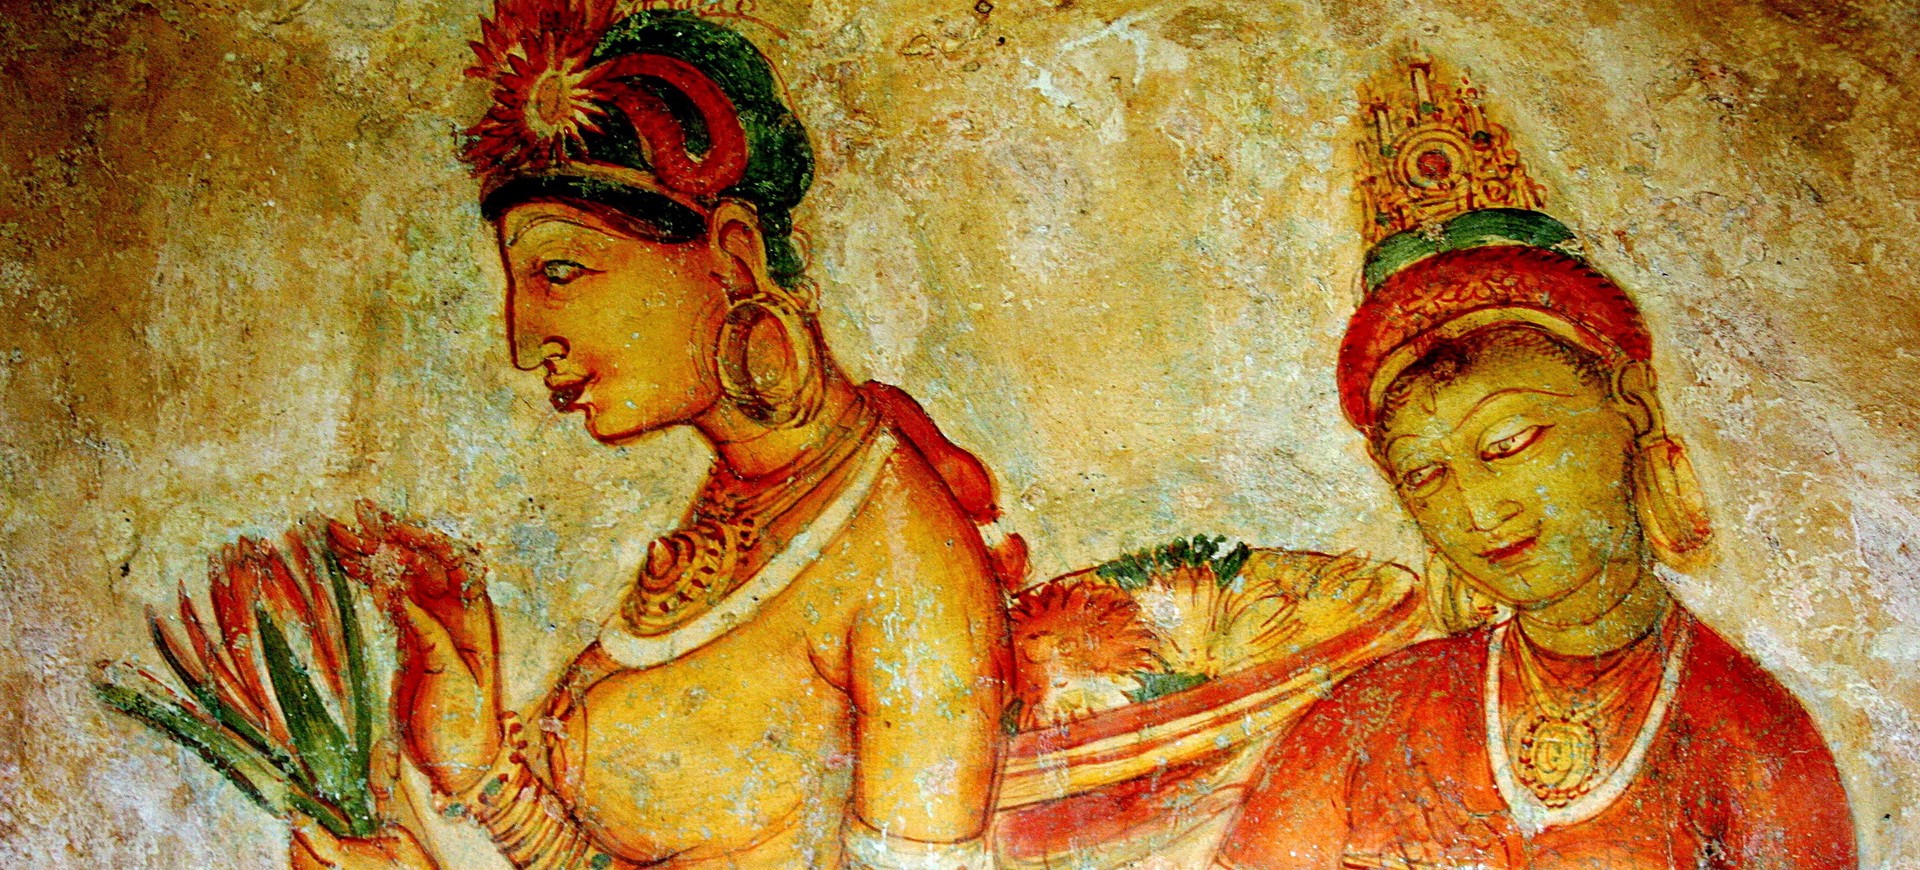 Sri Lanka Sigiriya Les fresques de Demoiselles de Sigiriya